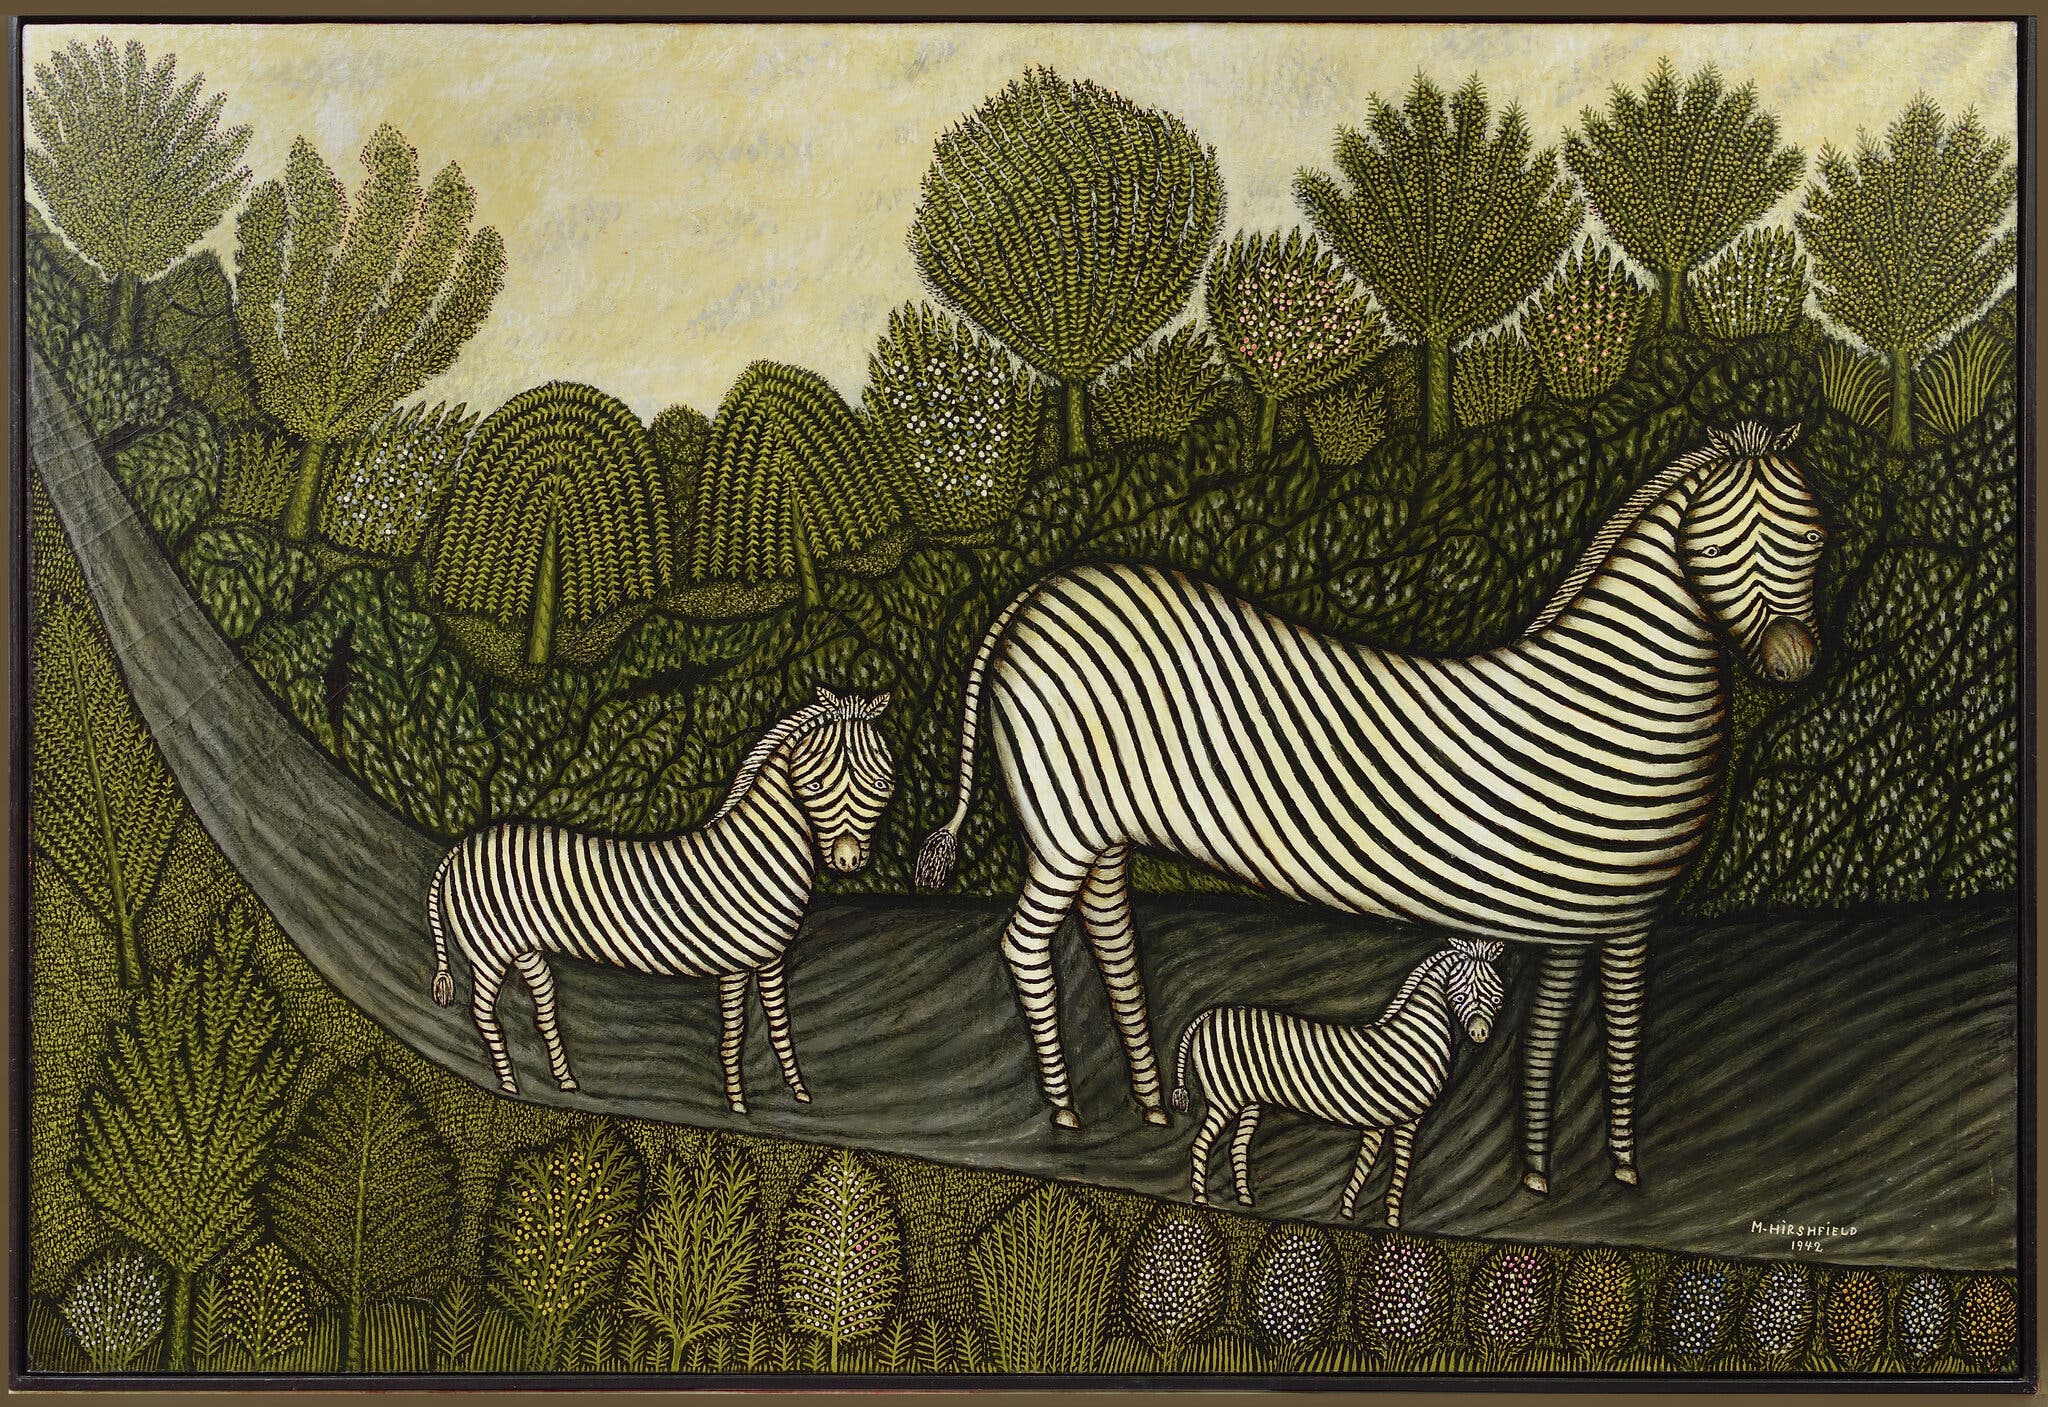 Zebracsalád by Morris Hirshfield - 1942 